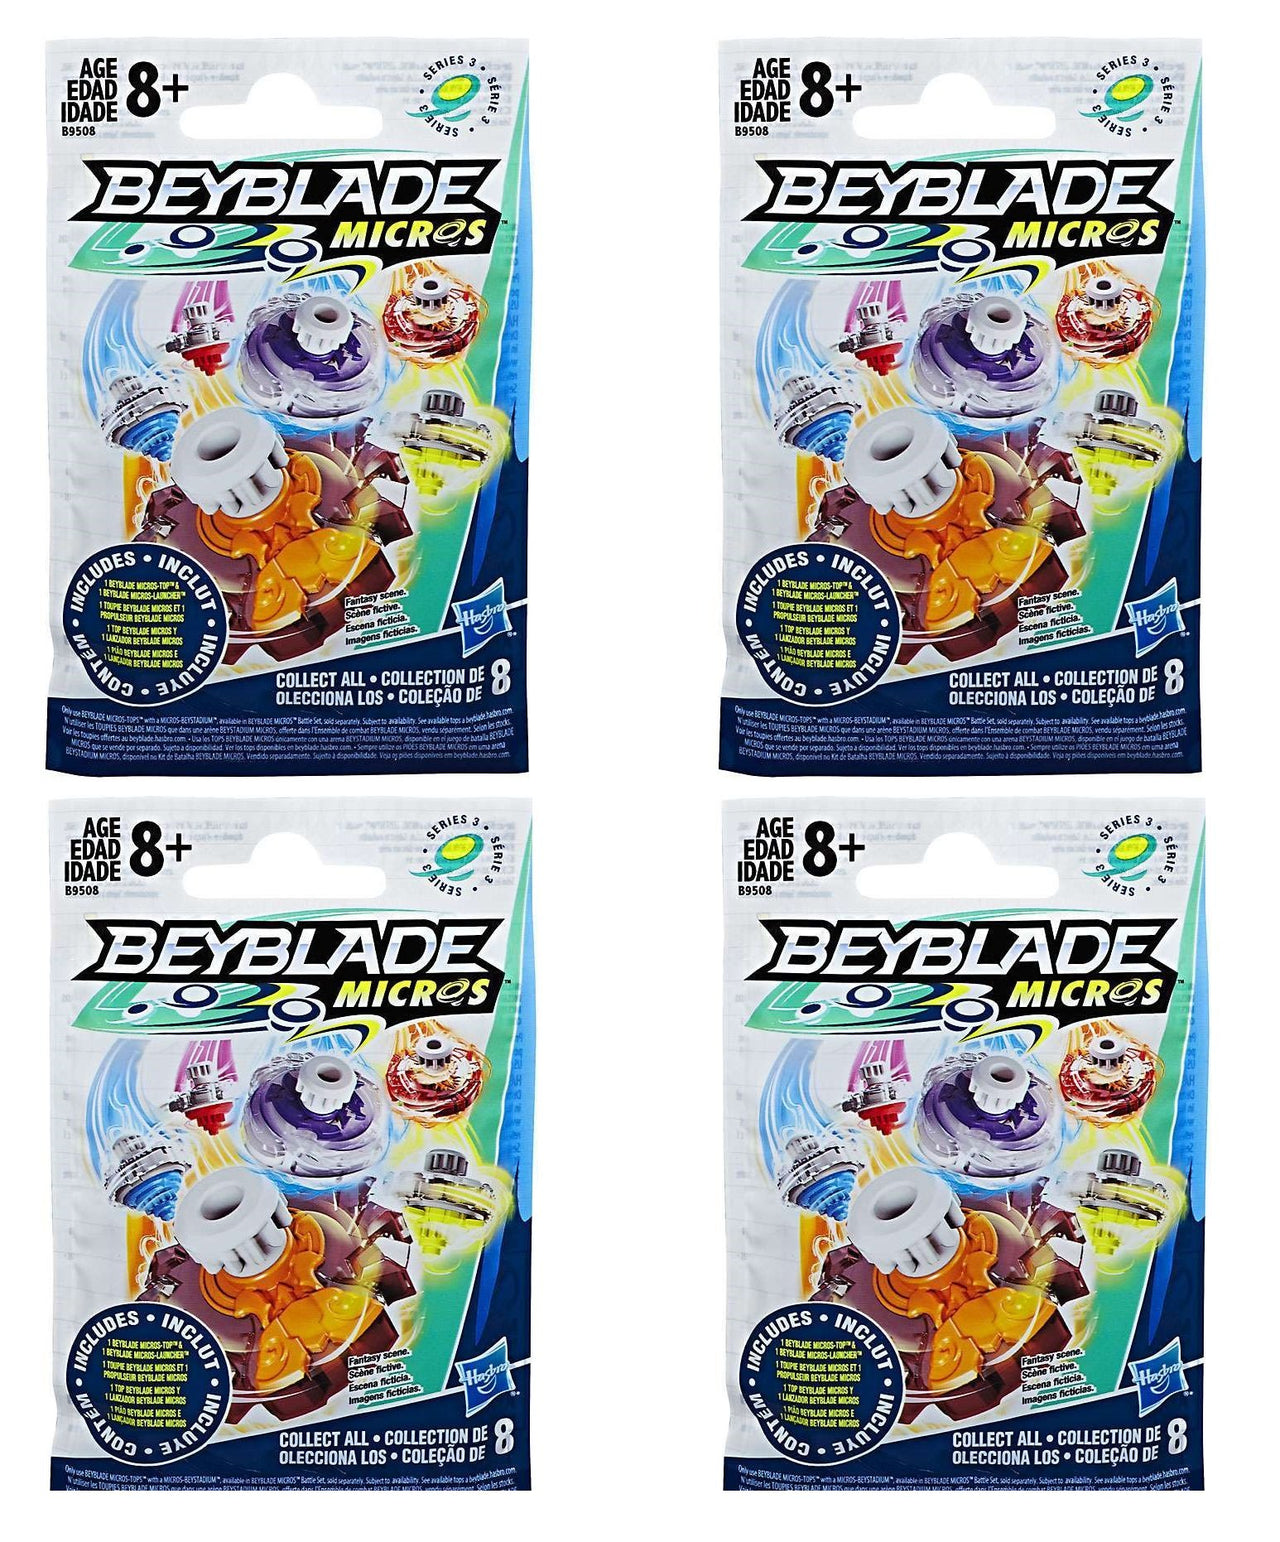 BEYBLADE Micros Series 3 Master Kids Company Action Battling 